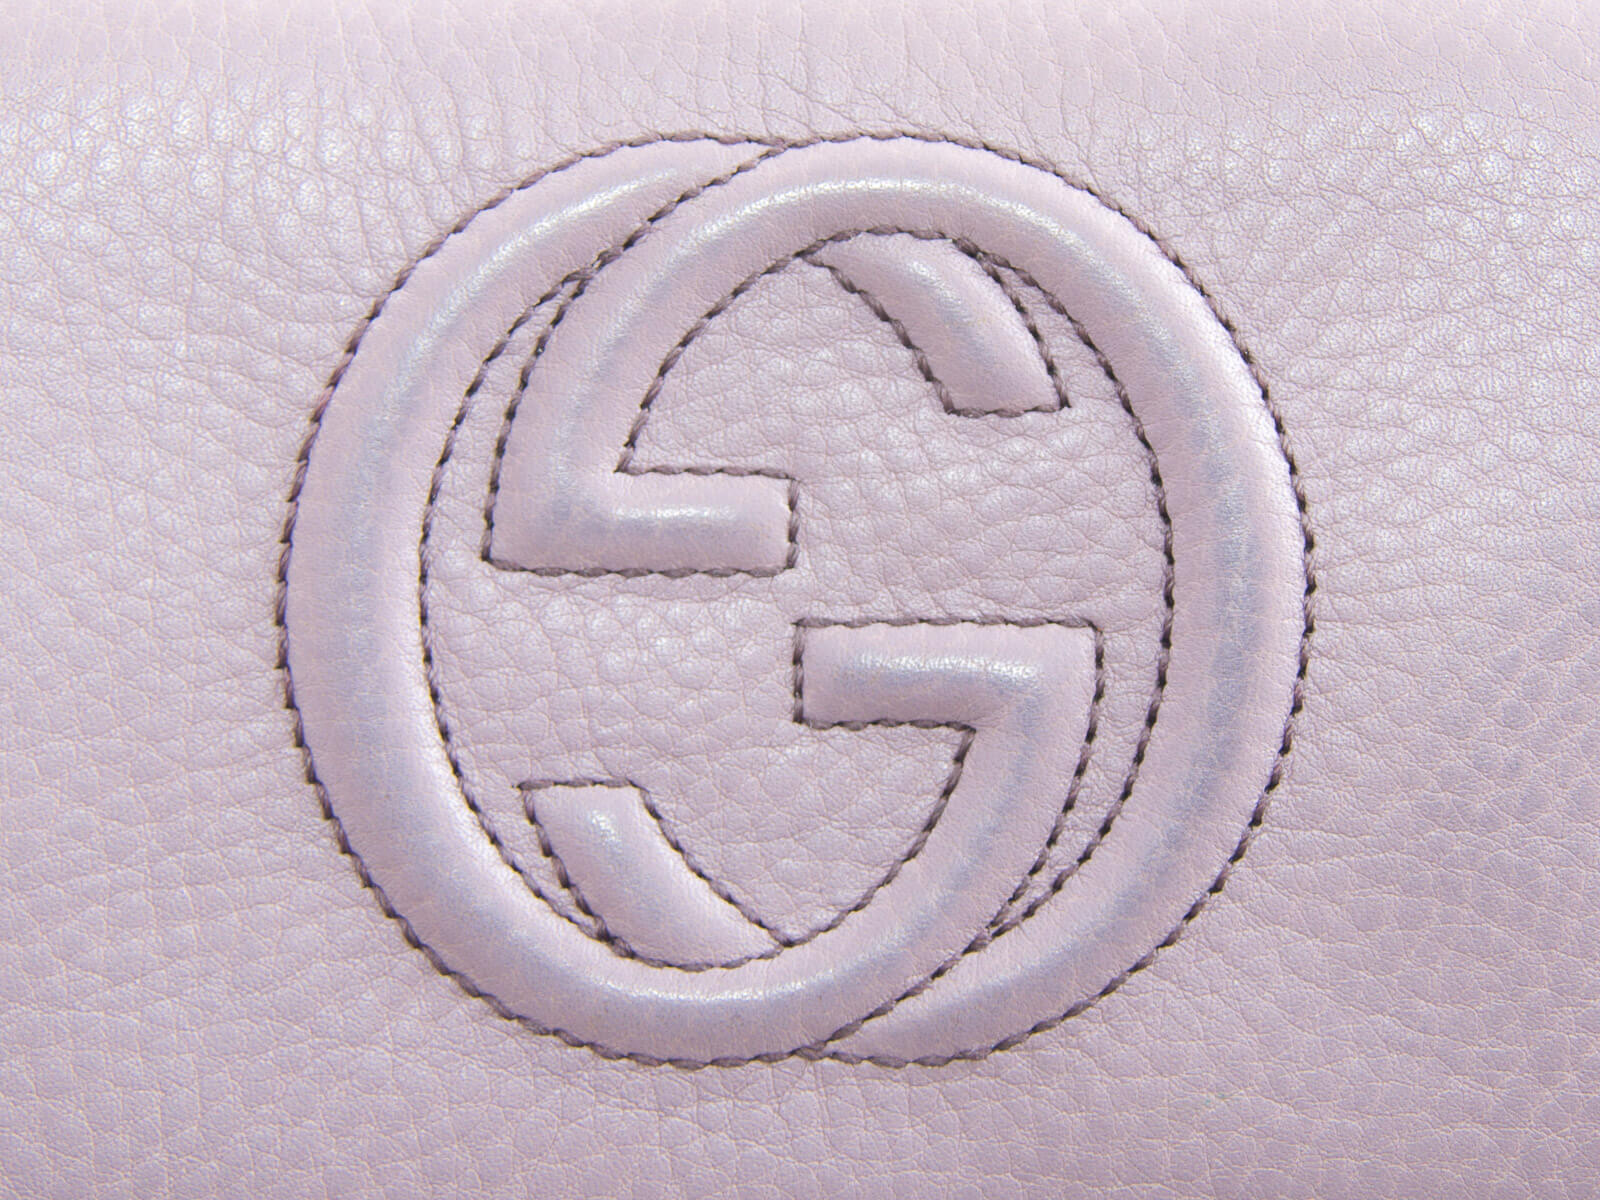 Authentic Gucci GG logo Soho lavender 